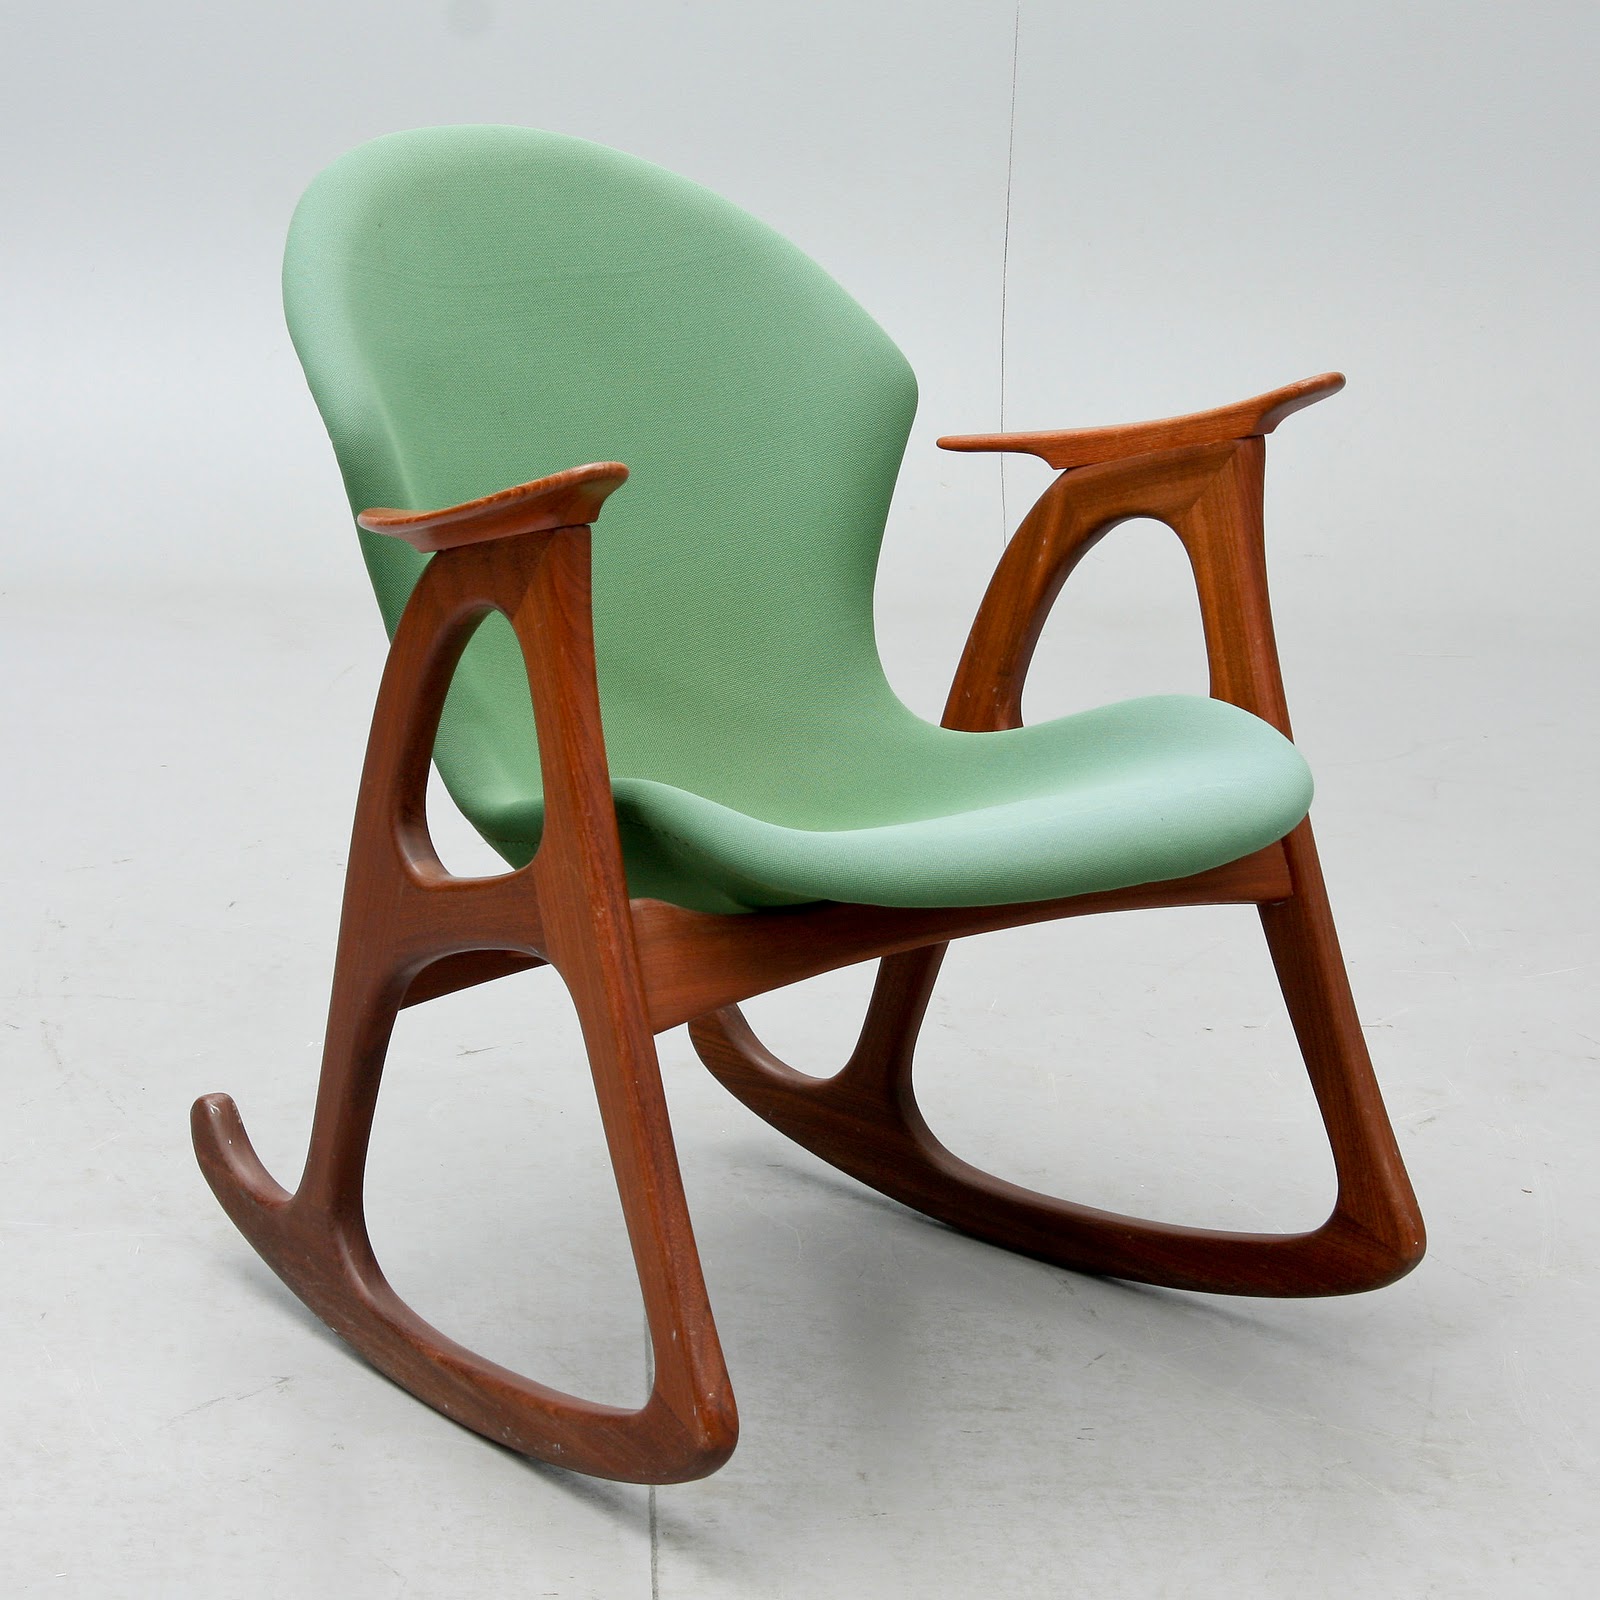 Nordiska Style: Danish teak rocking chair